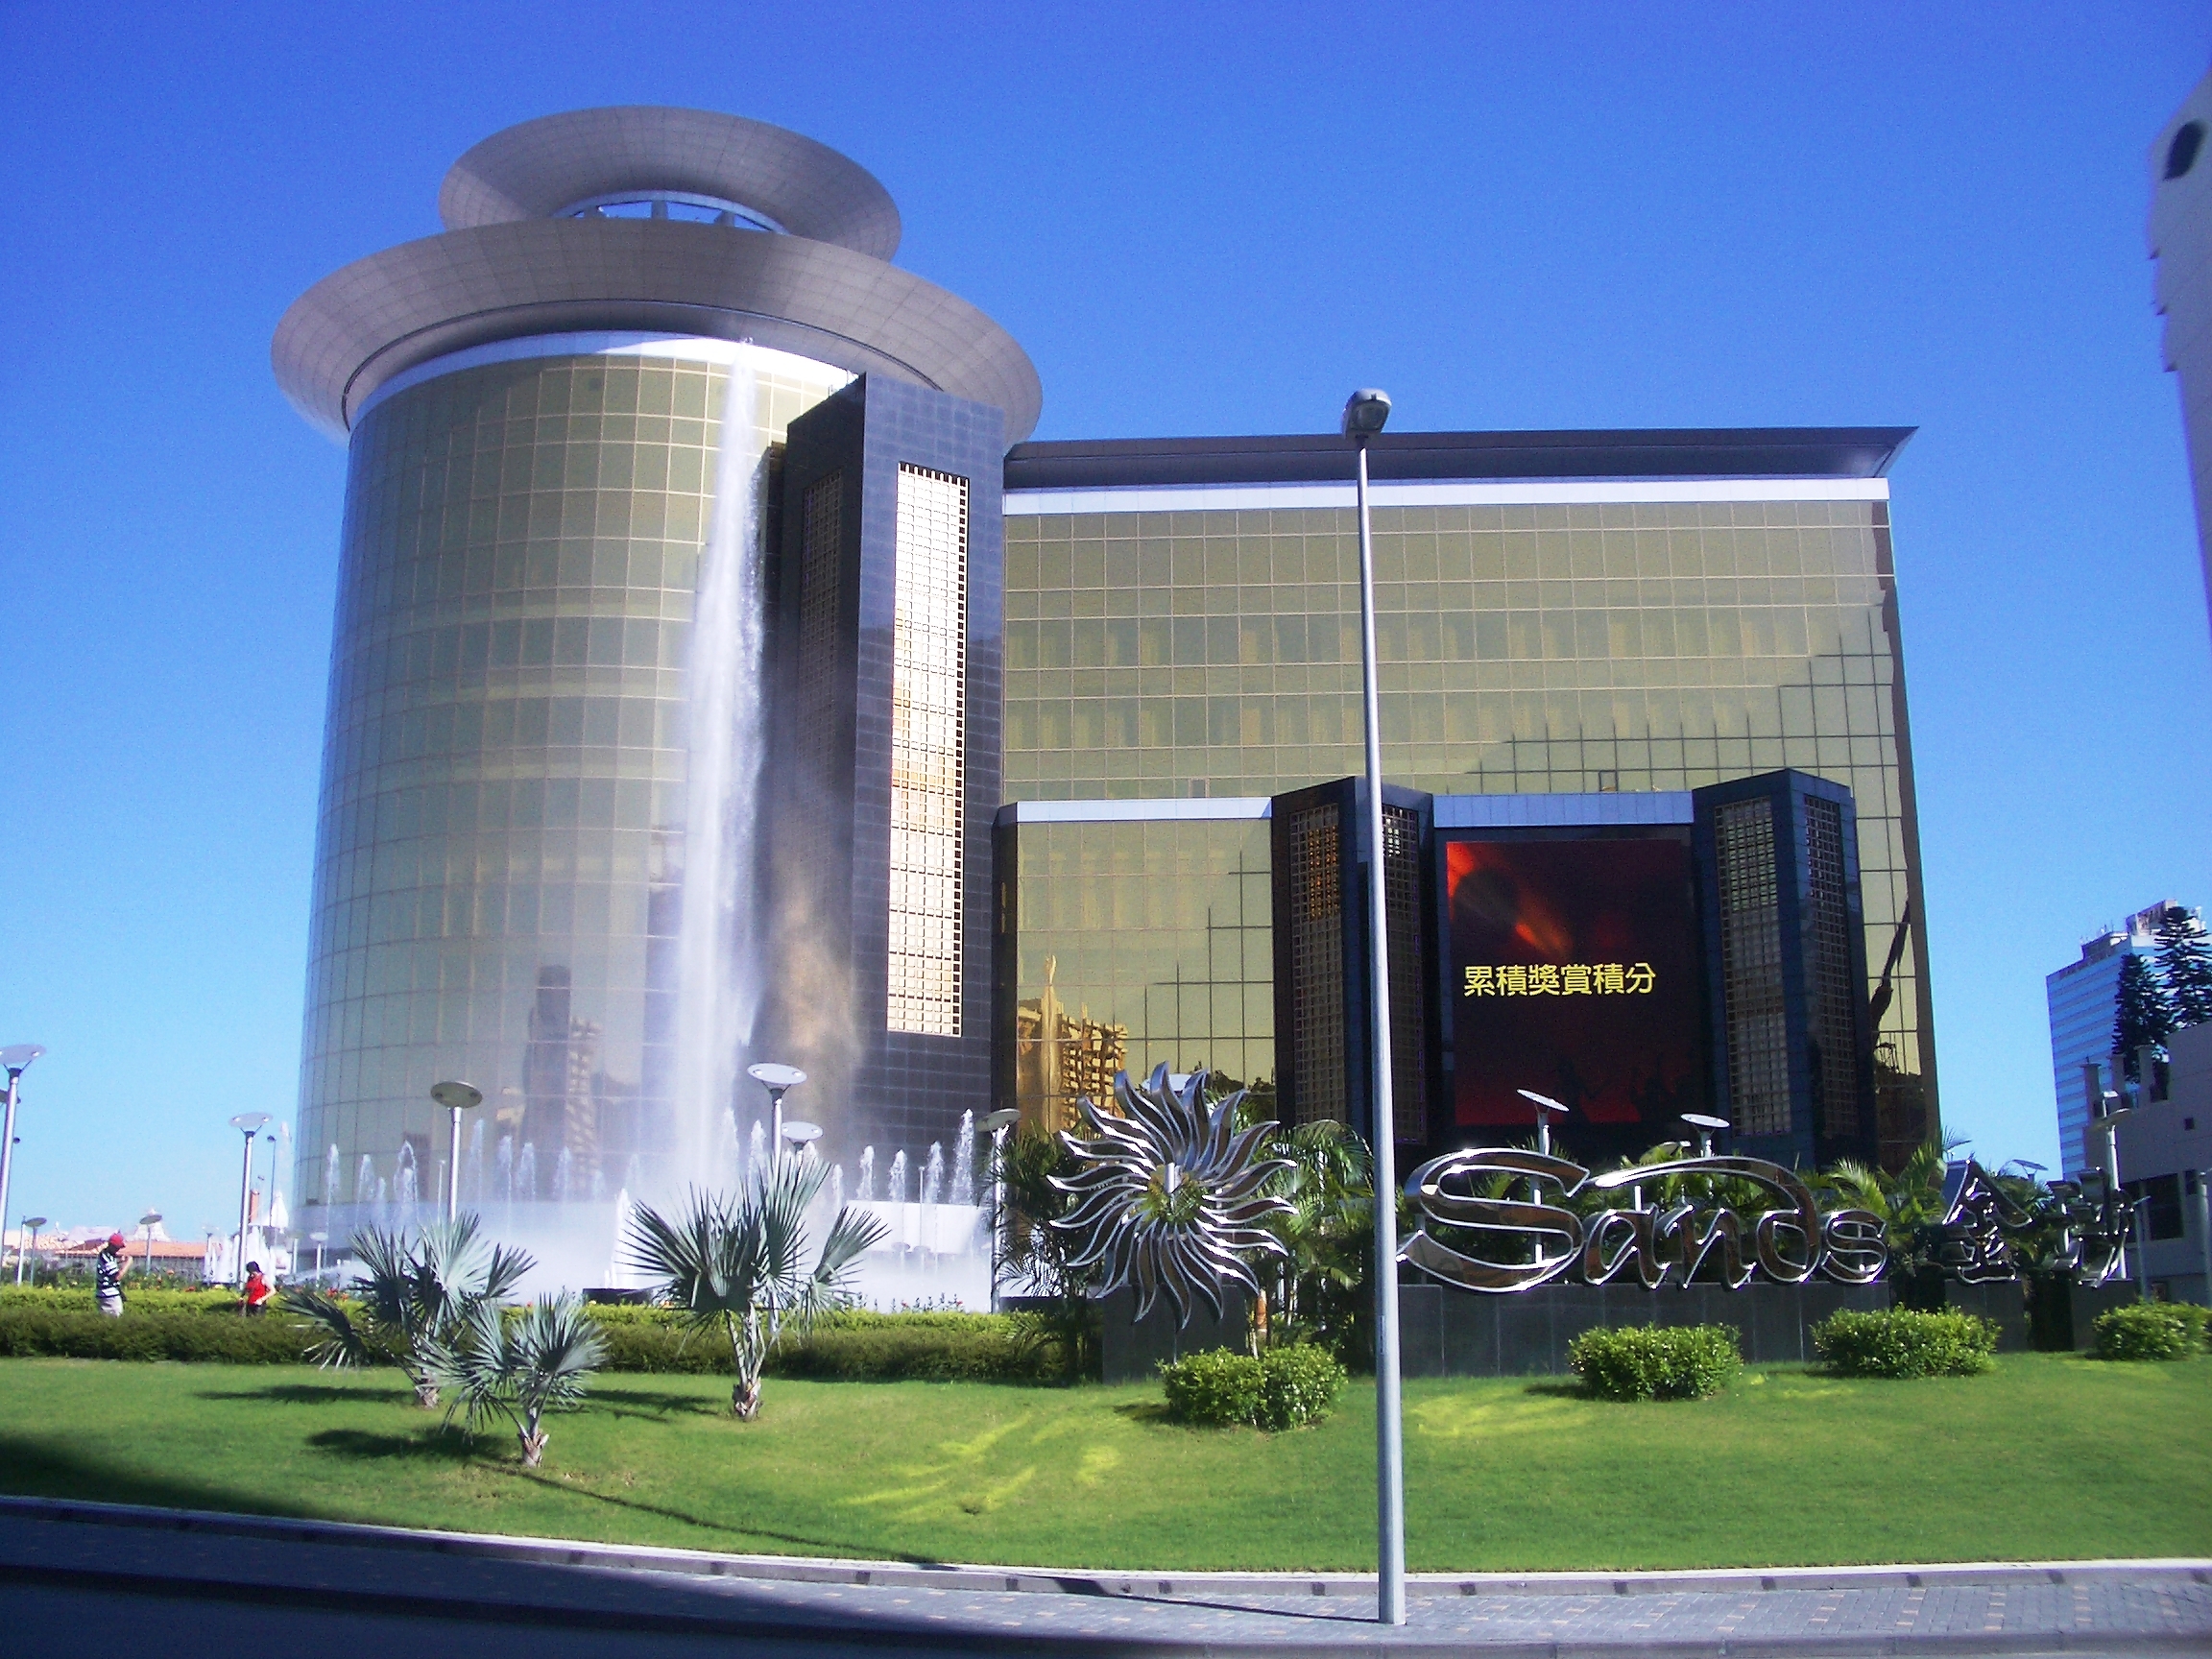 Sands Hotel and Casino - Wikipedia